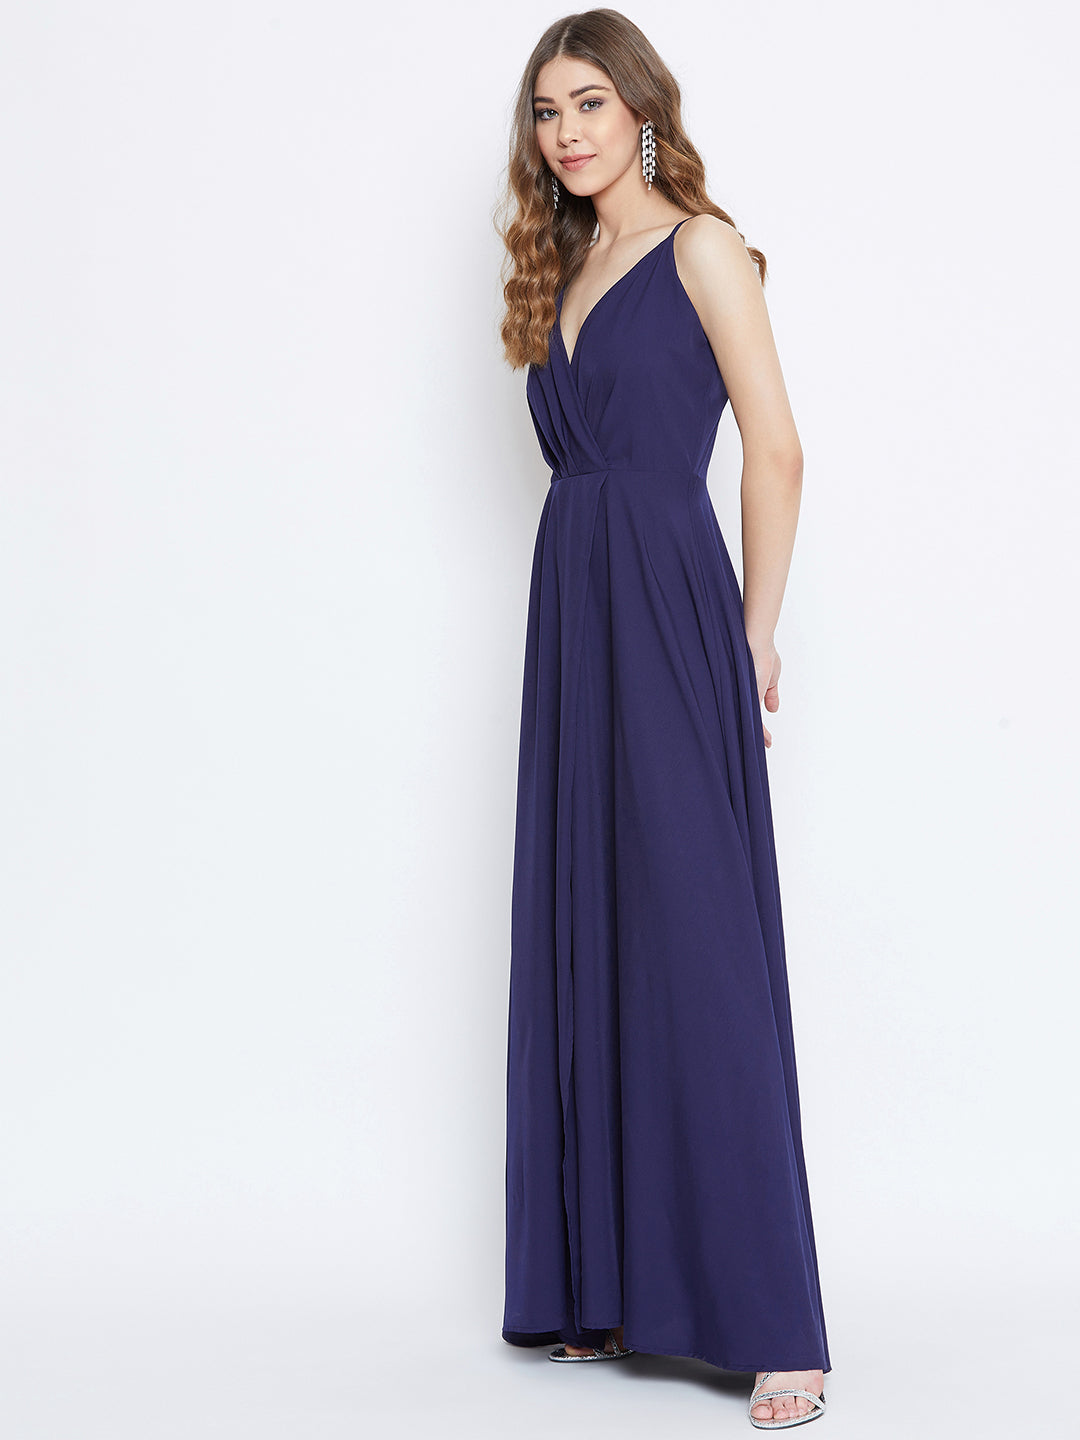 Berrylush Women Solid Navy Blue V-Neck Thigh-High Slit Fit & Flare Maxi Dress